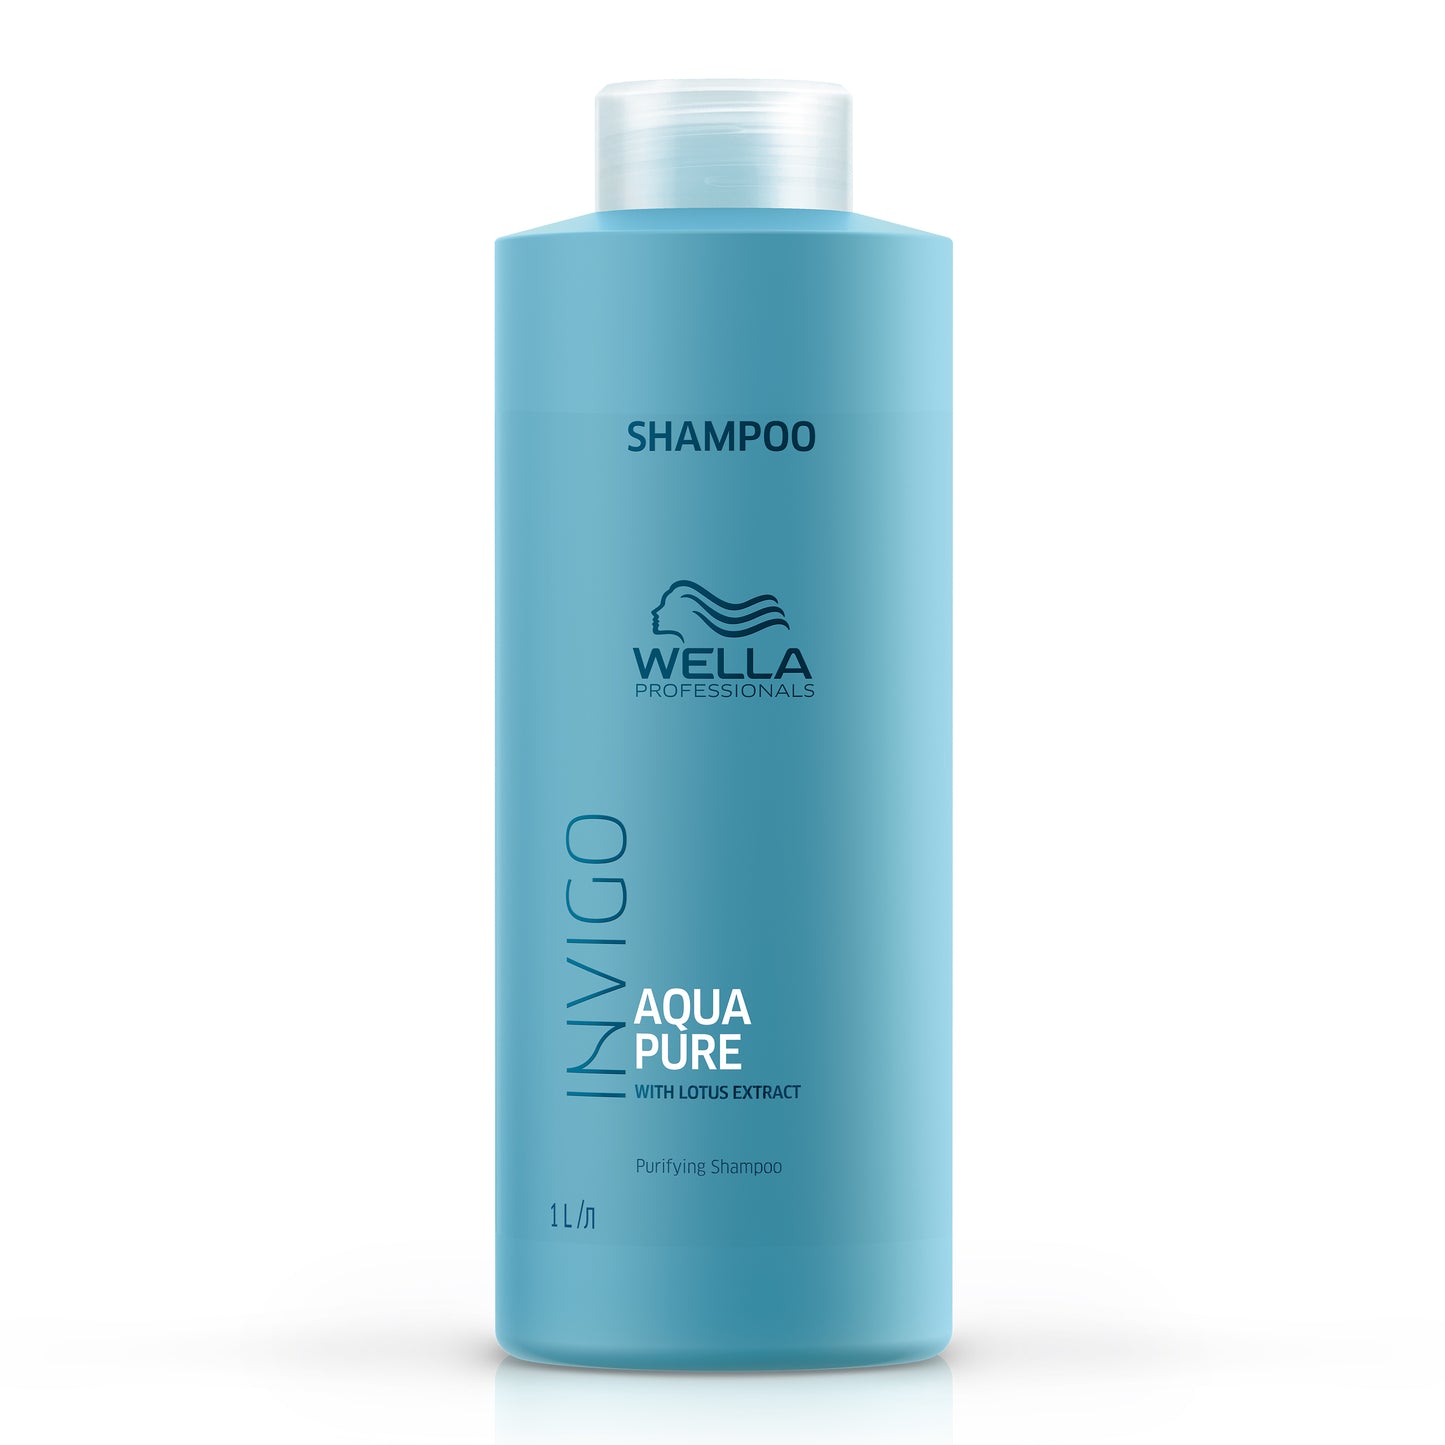 Wella - Invigo - Scalp Balance - Deep Cleansing Shampoo for Oily Scalp